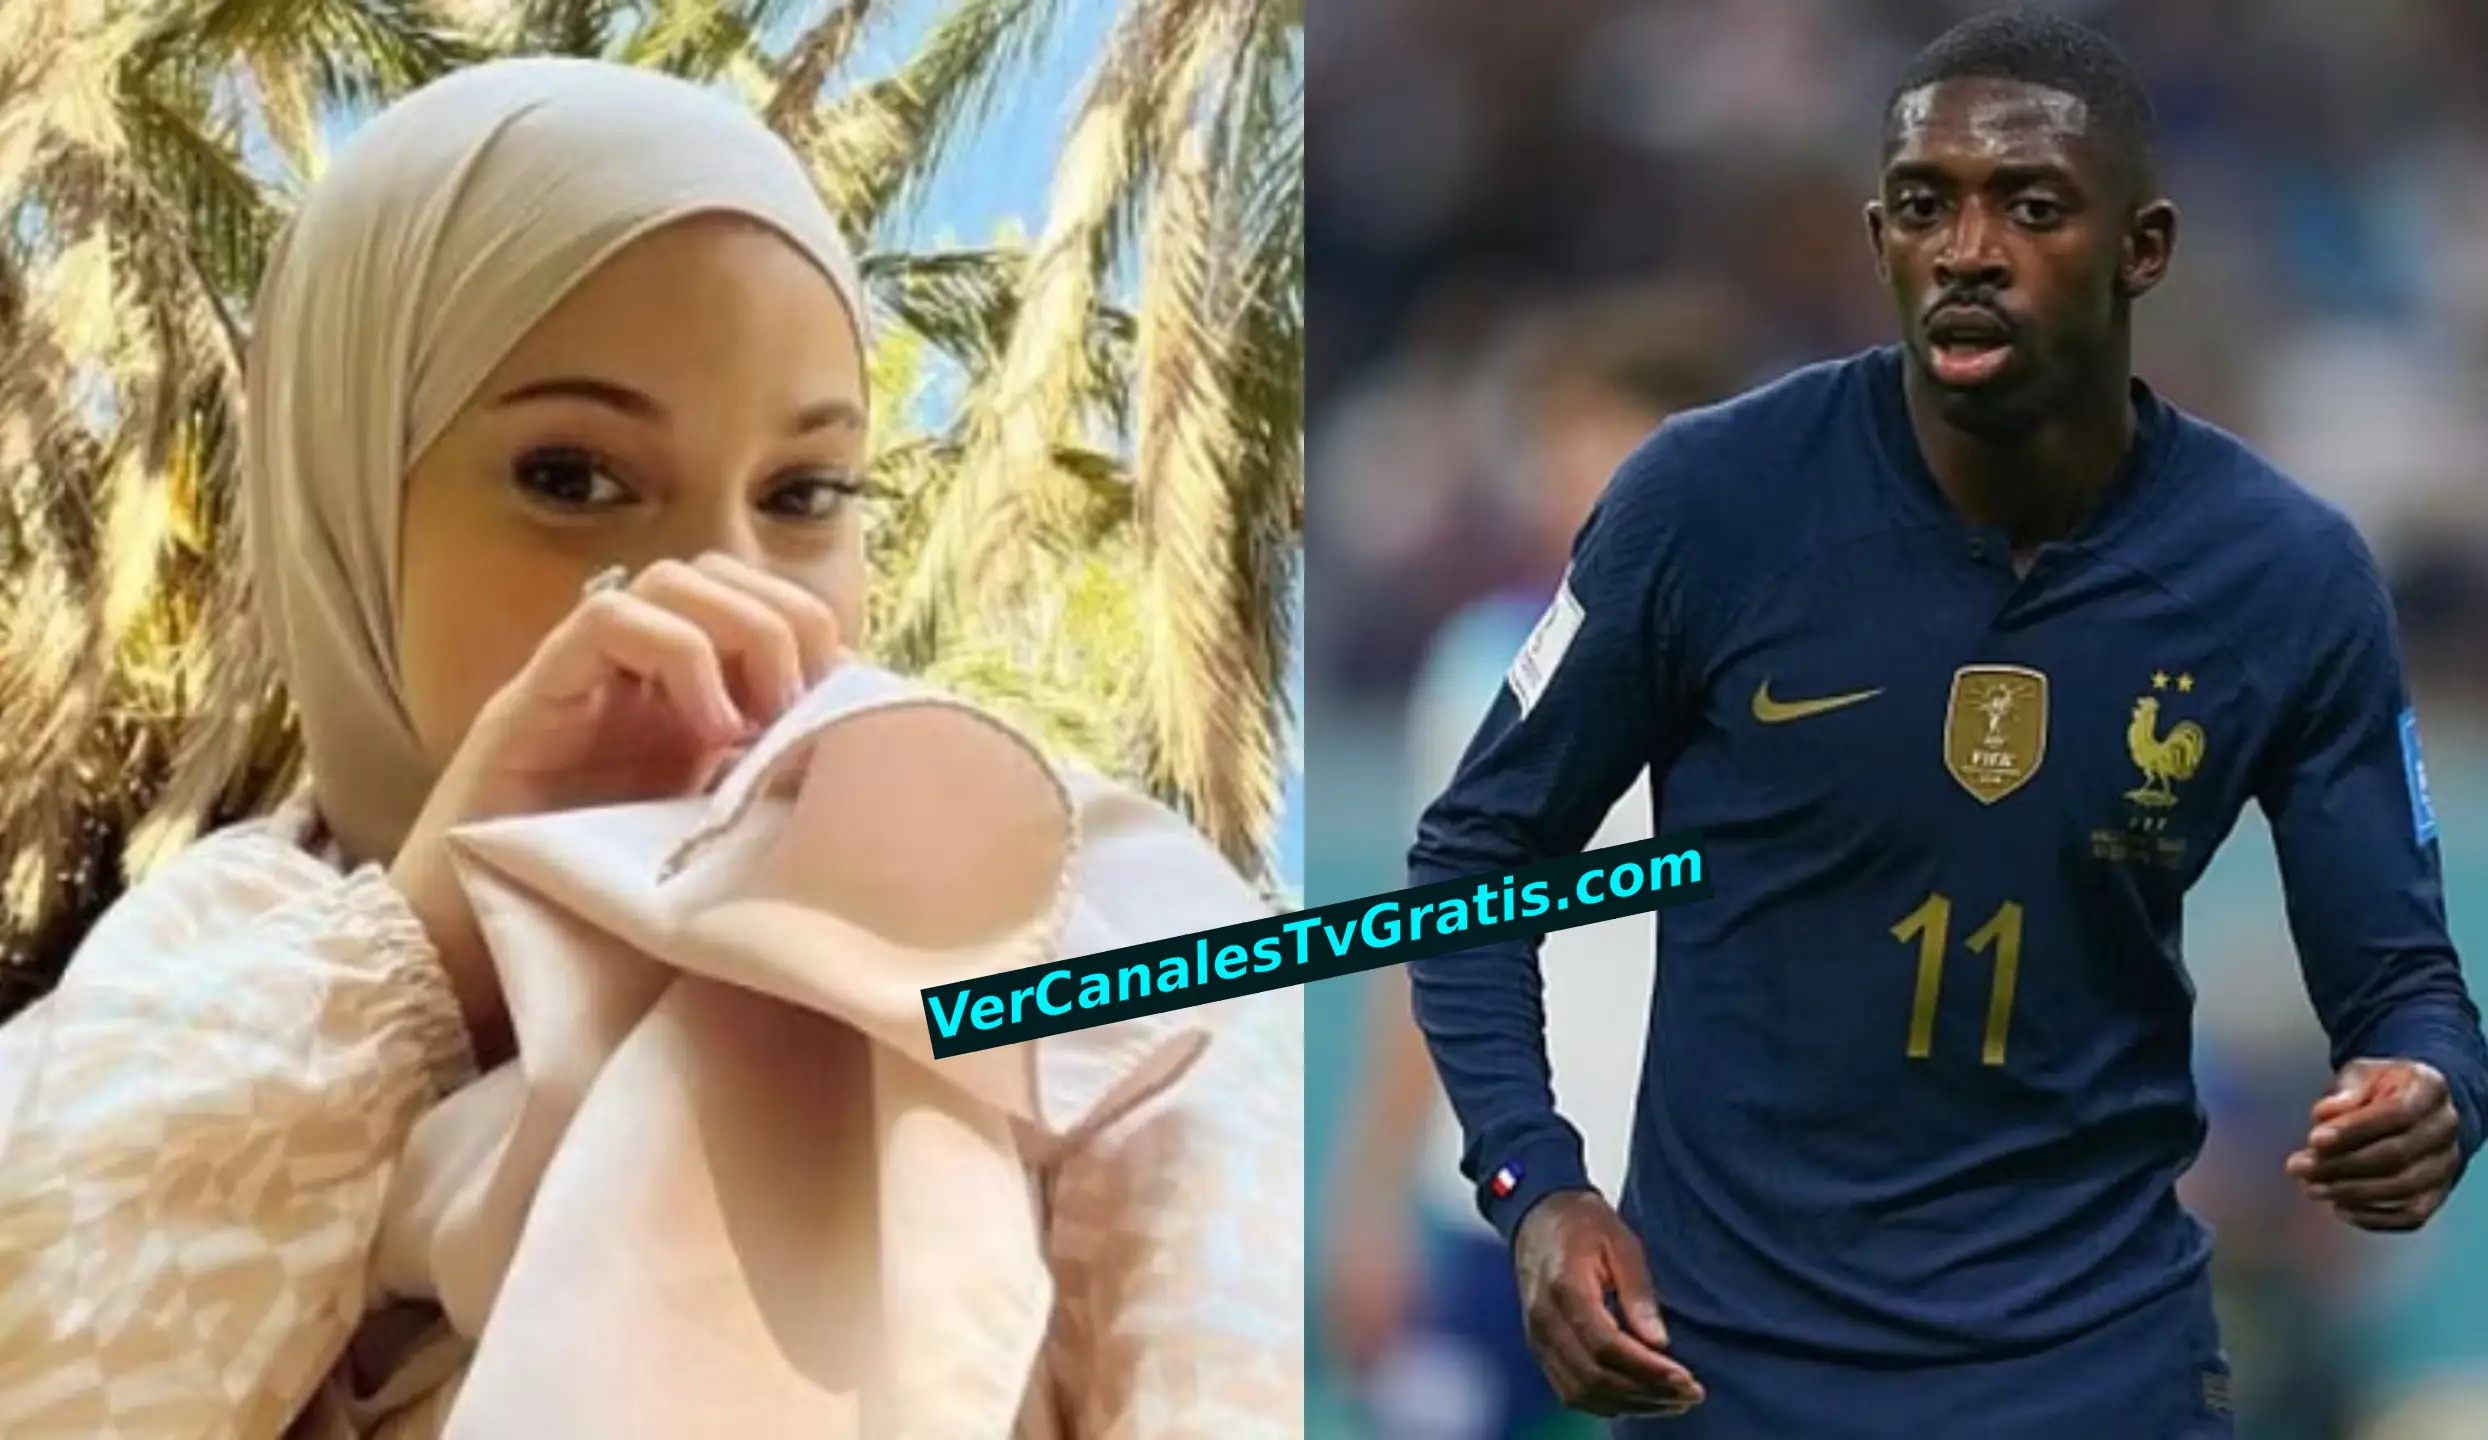 Rima Edbouche footballer Dembele’s wife